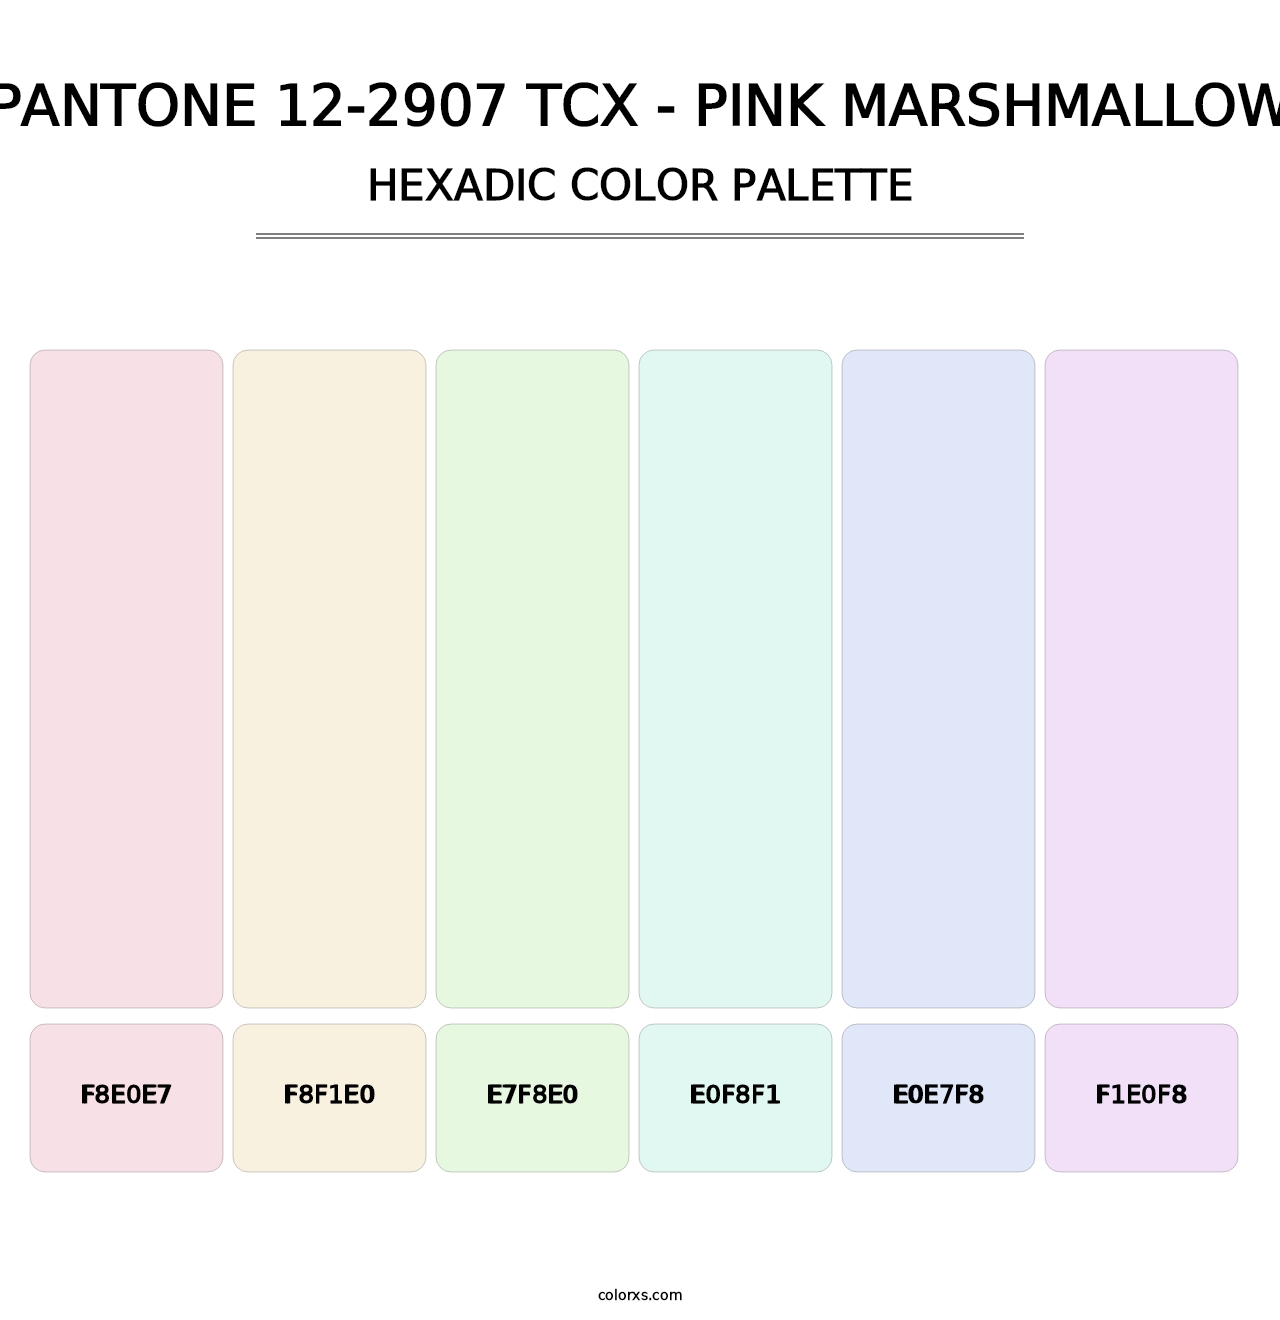 PANTONE 12-2907 TCX - Pink Marshmallow - Hexadic Color Palette